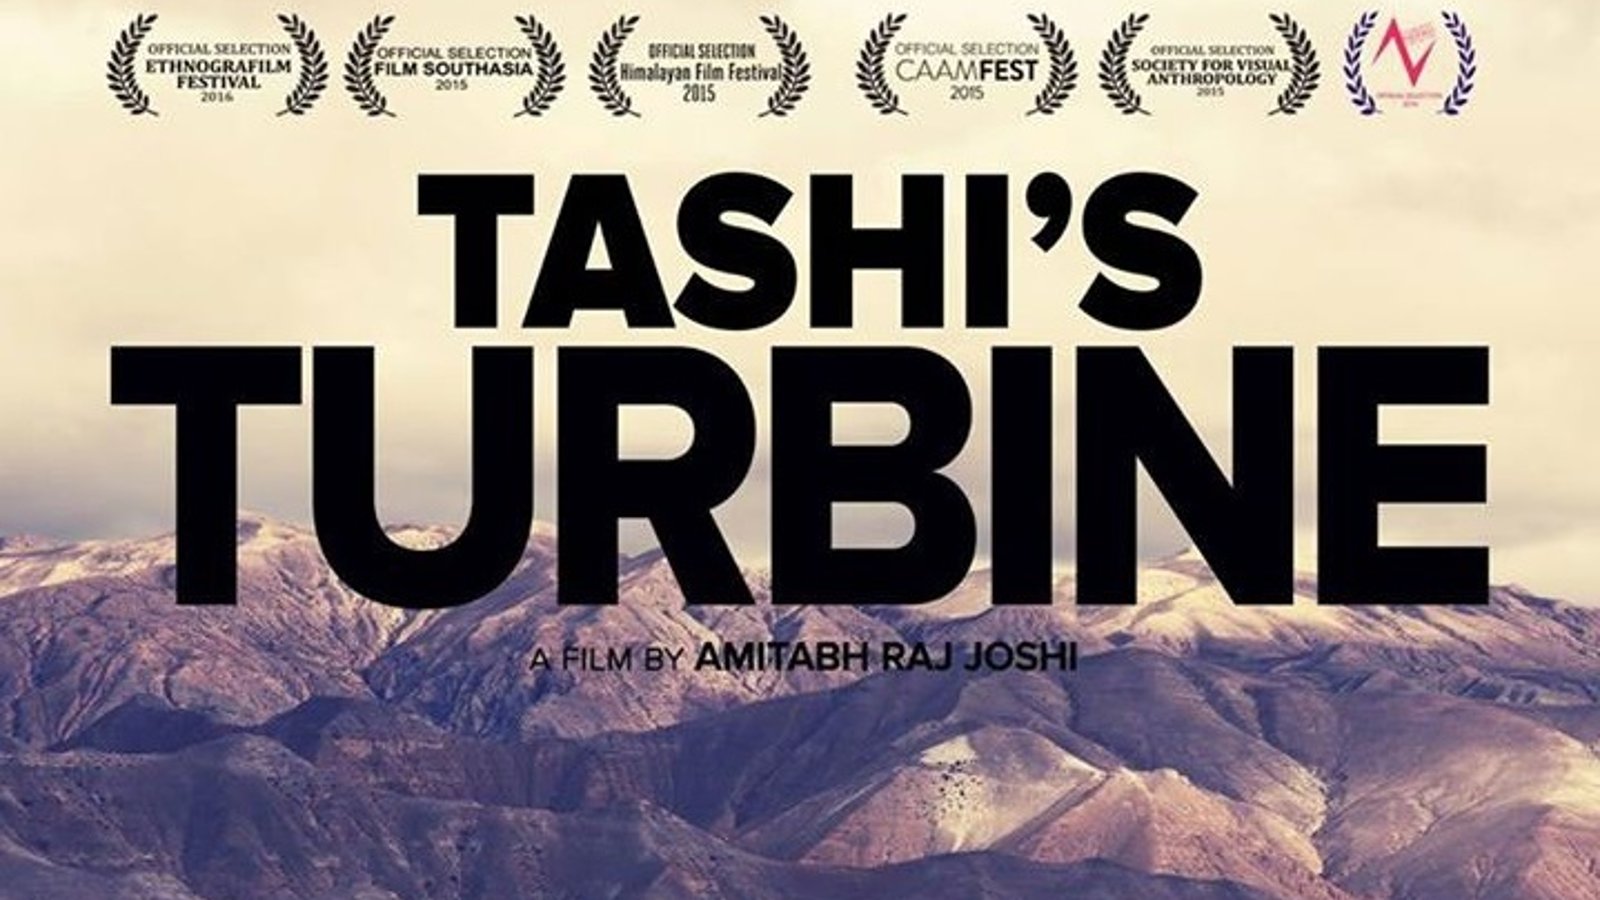 Tashi's Turbine - A Small Village in Nepal Harnesses Wind Energy